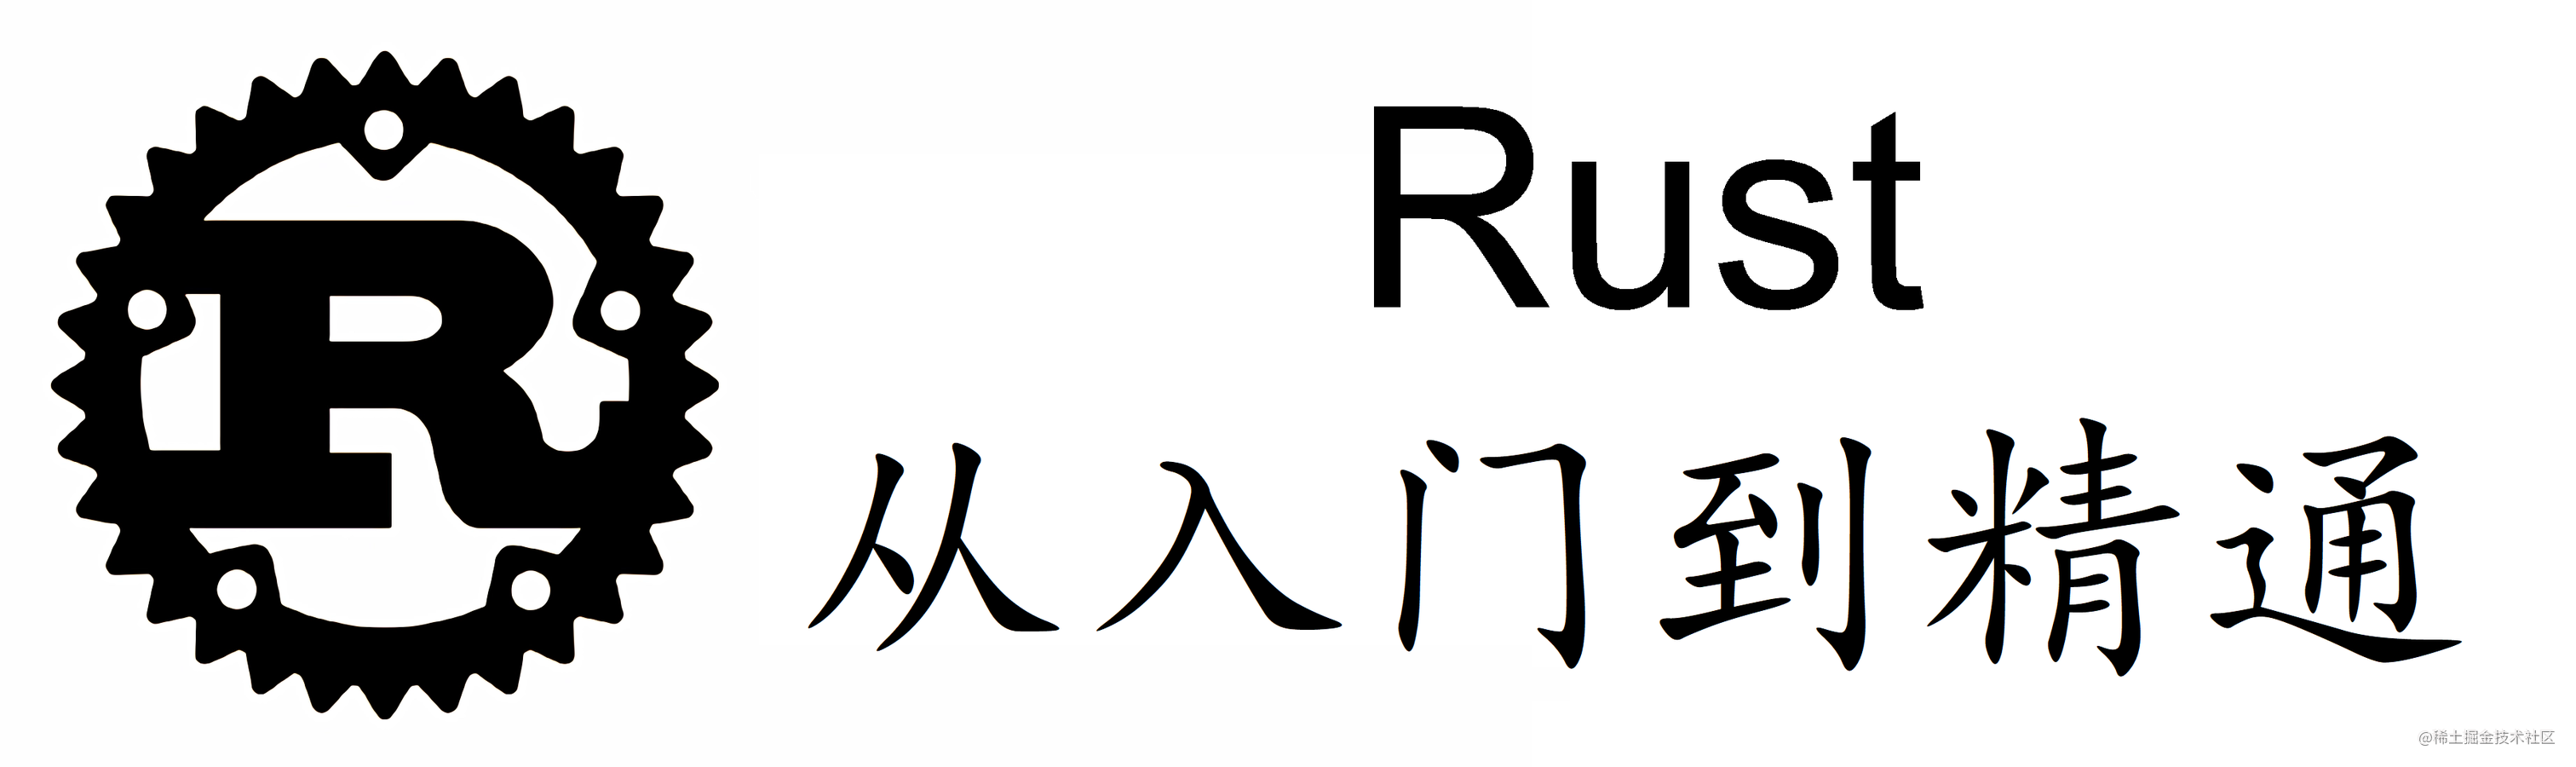 rust_tutorial_logo.png